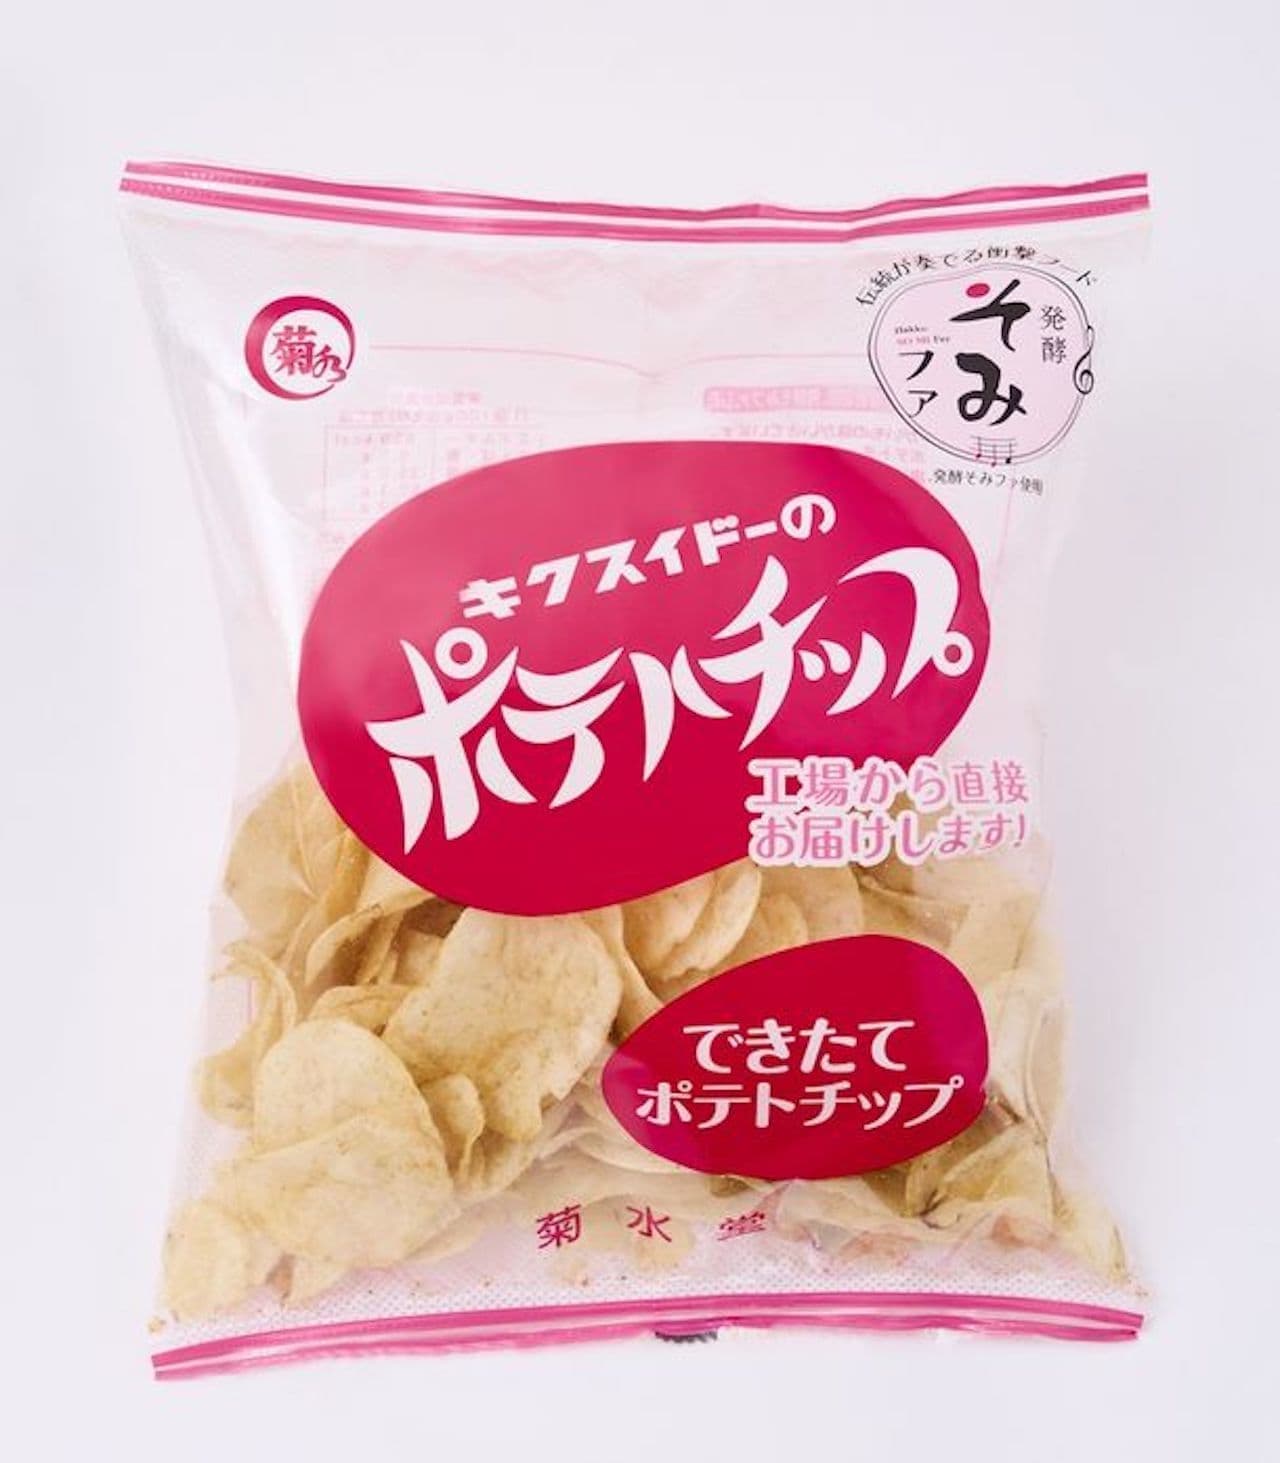 Kikusuido "Freshly Made Potato Chips - Fermented Somifa